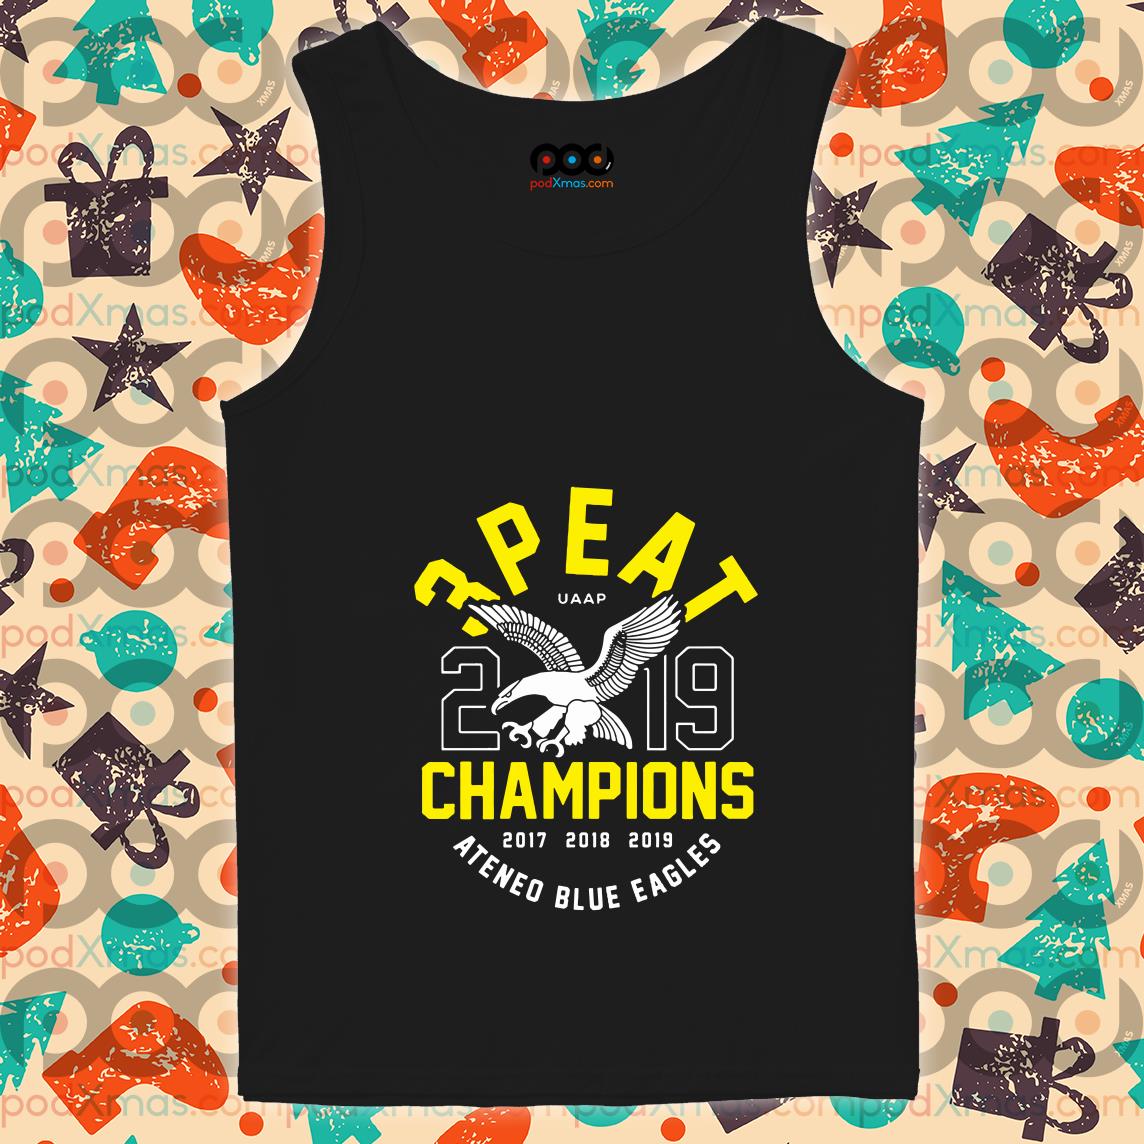 3 peat championship shirts